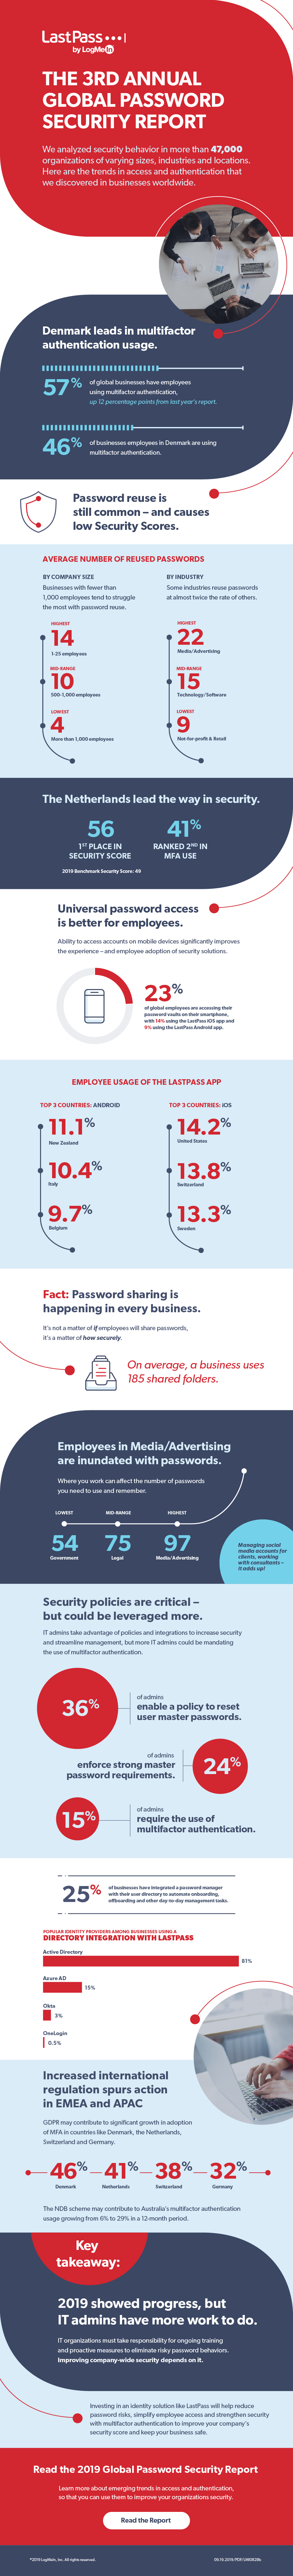 Global Password Security Report Infographic